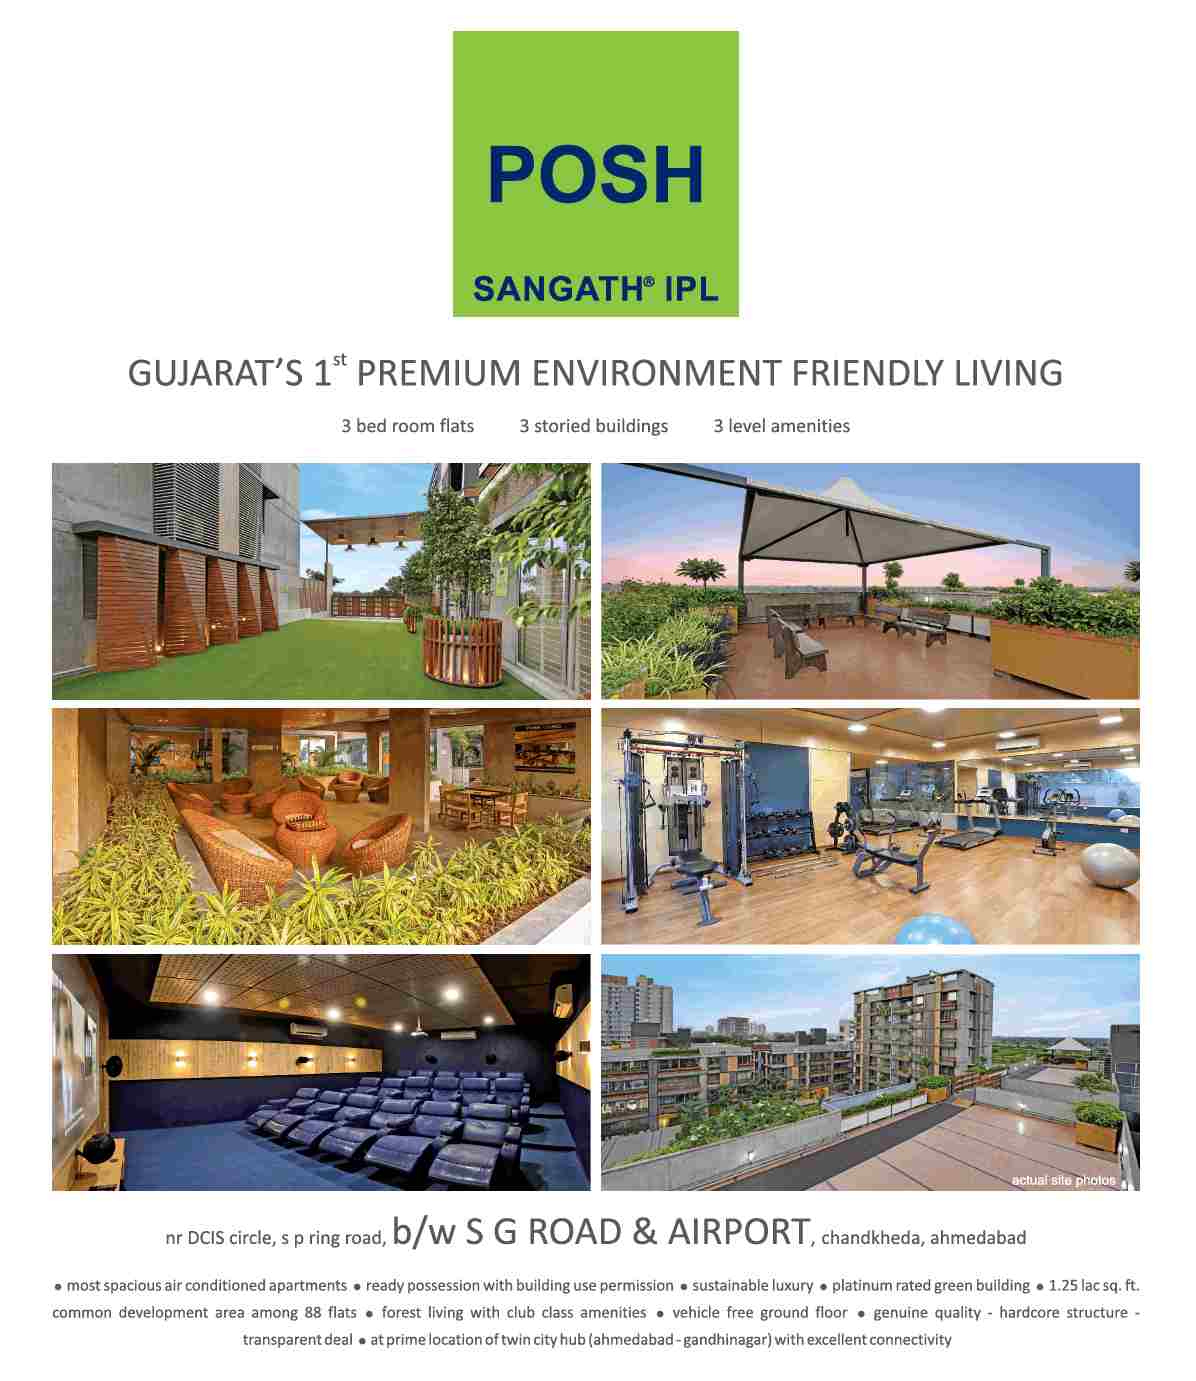 Live a premium environment friendly living at Sangath IPL Posh in Ahmedabad Update